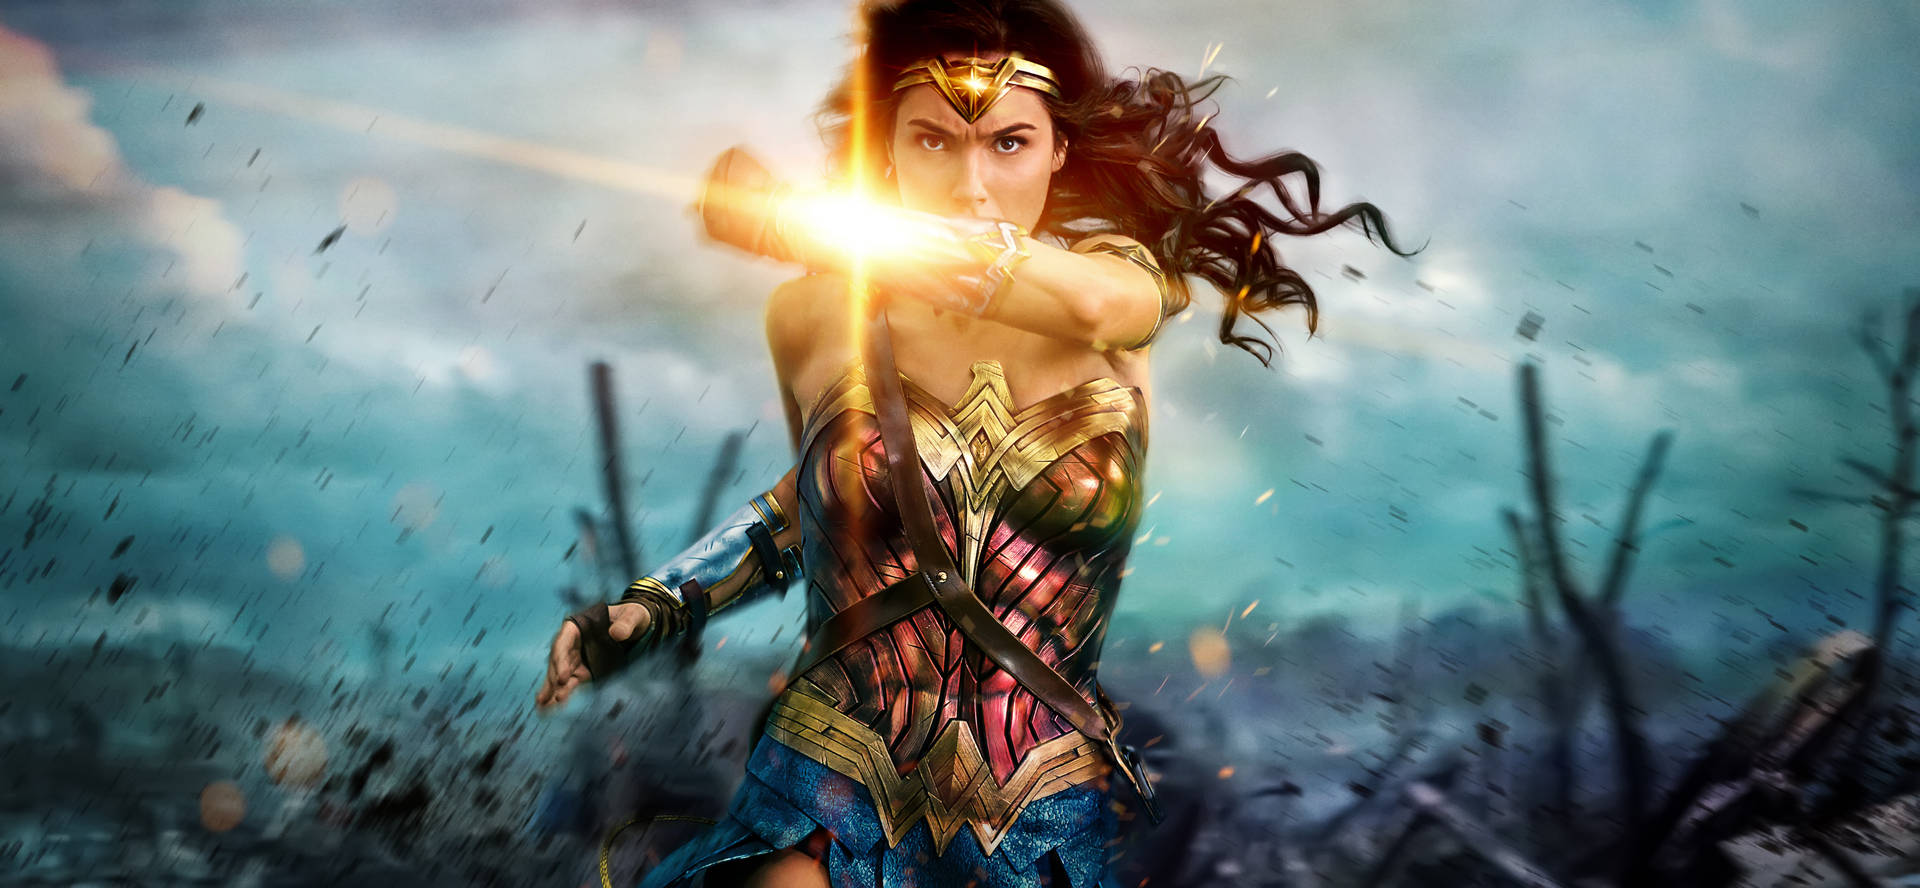 Top 999+ Wonder Woman Wallpaper Full HD, 4K✅Free to Use